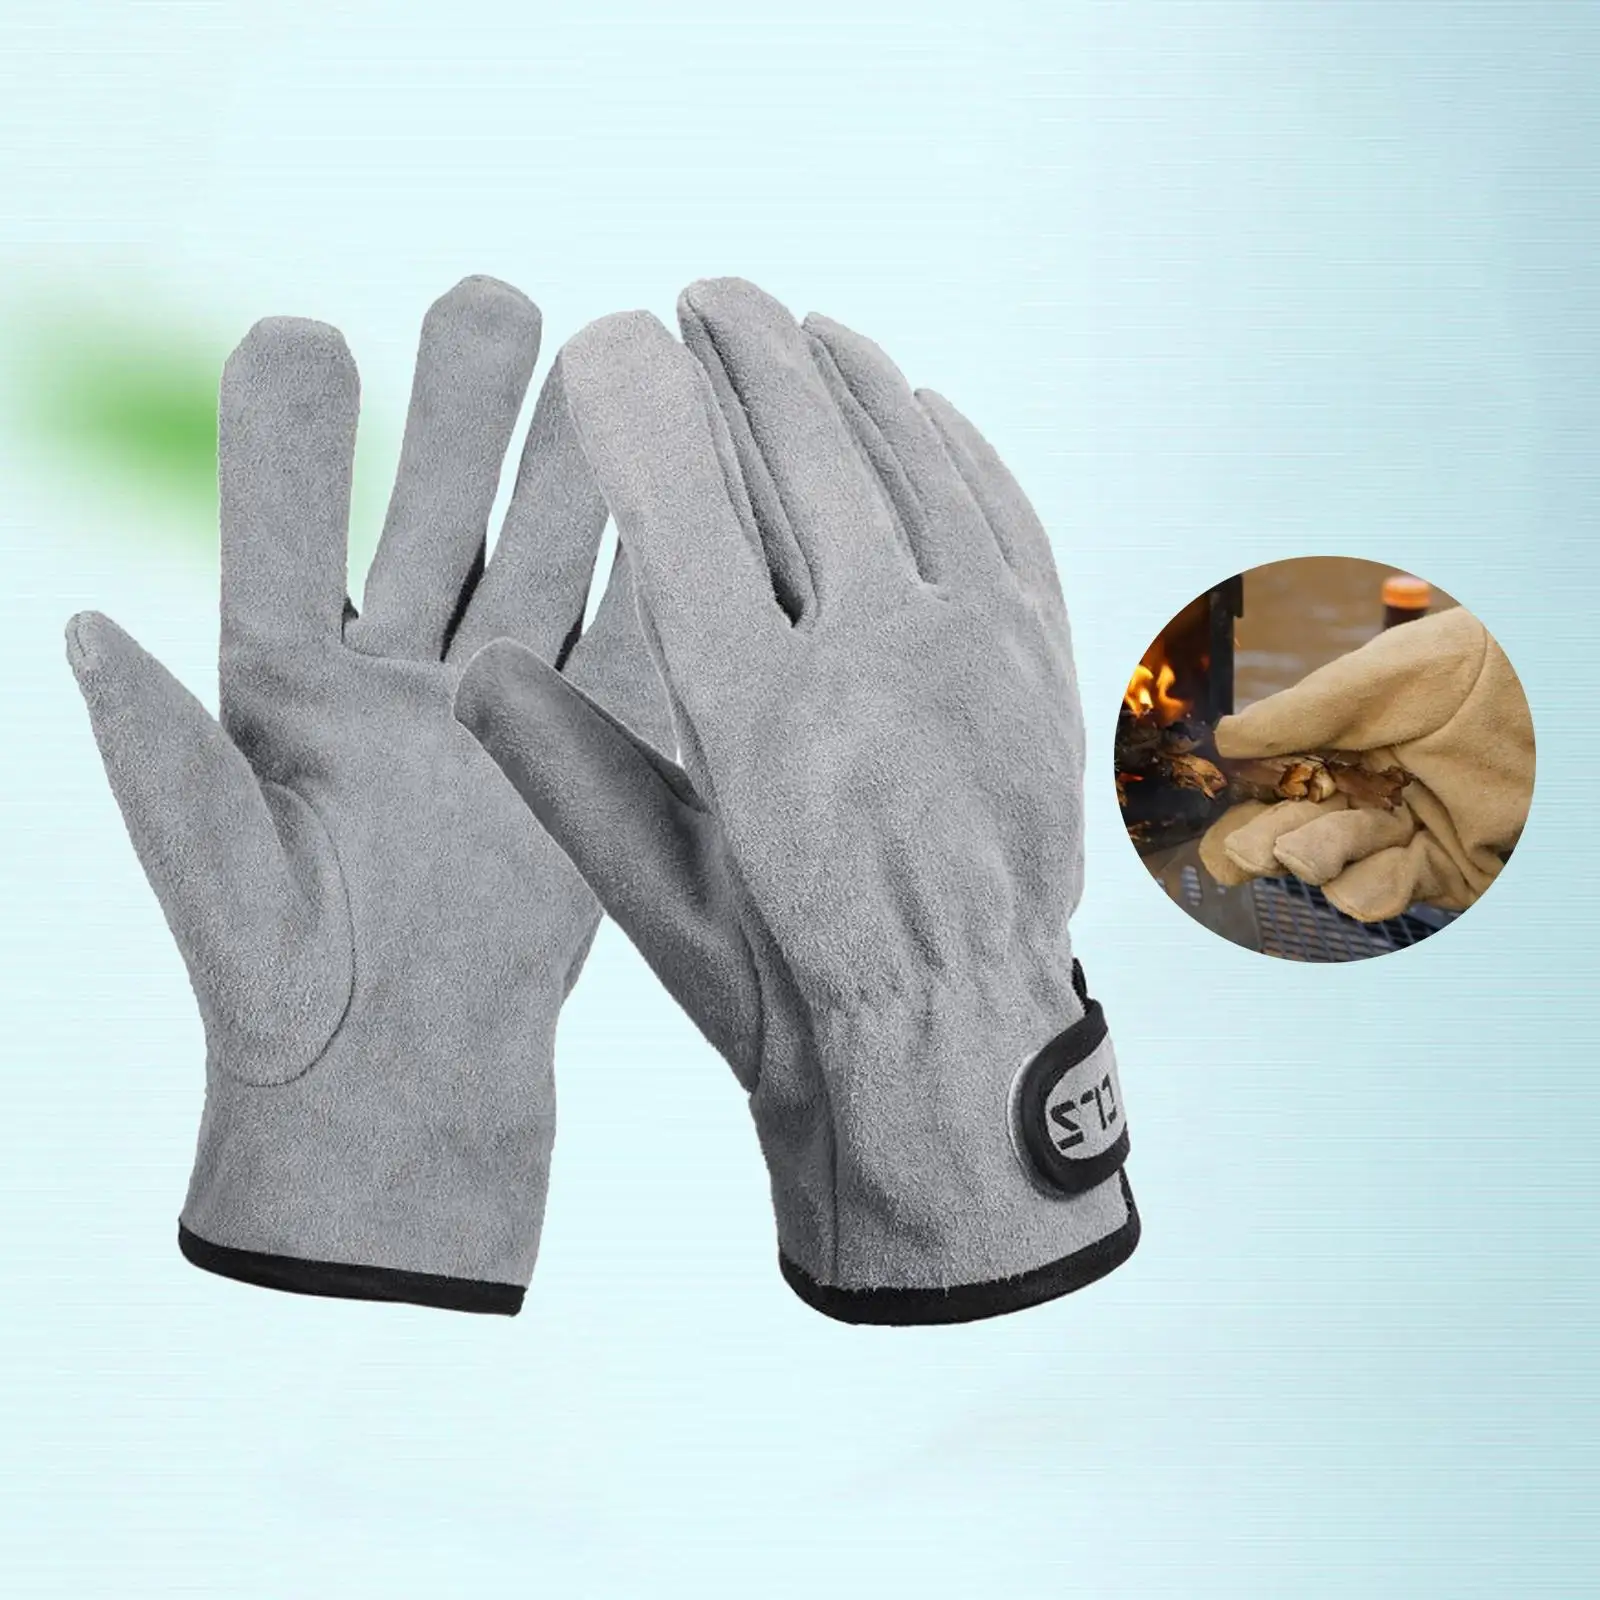 Leather Work Gloves Wear-Resisting Heat Resistance Utility Welding Gloves